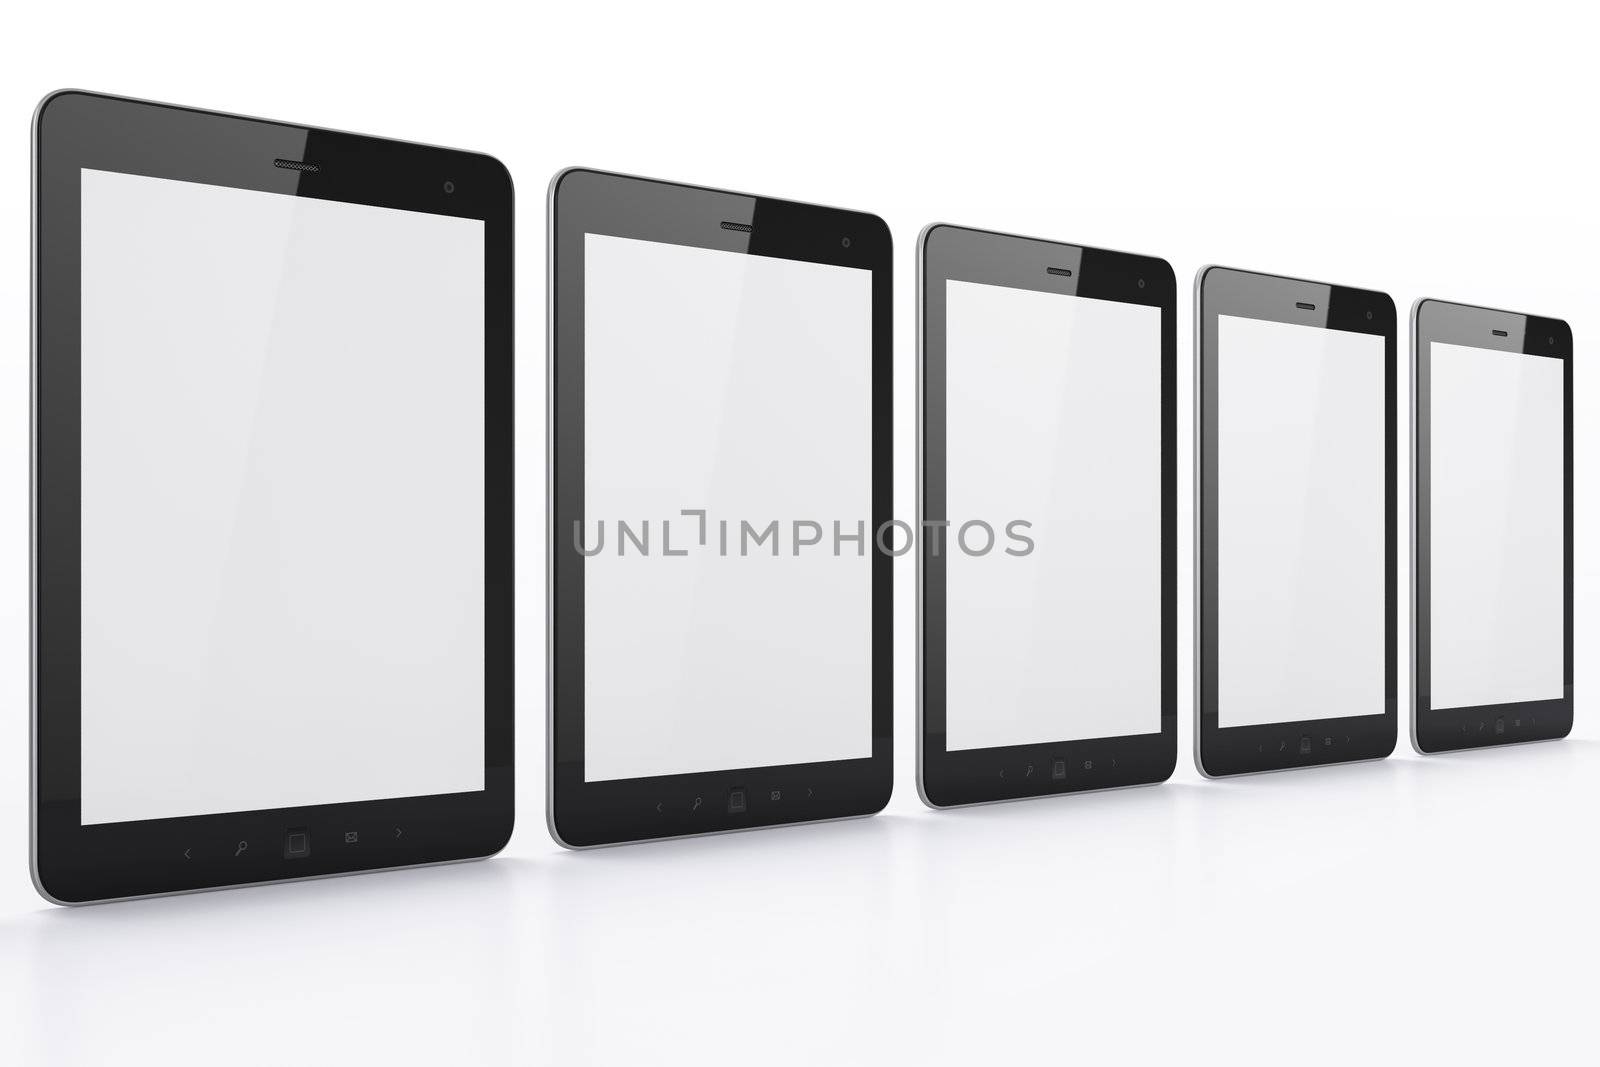 Black tablets on white background by maxkabakov